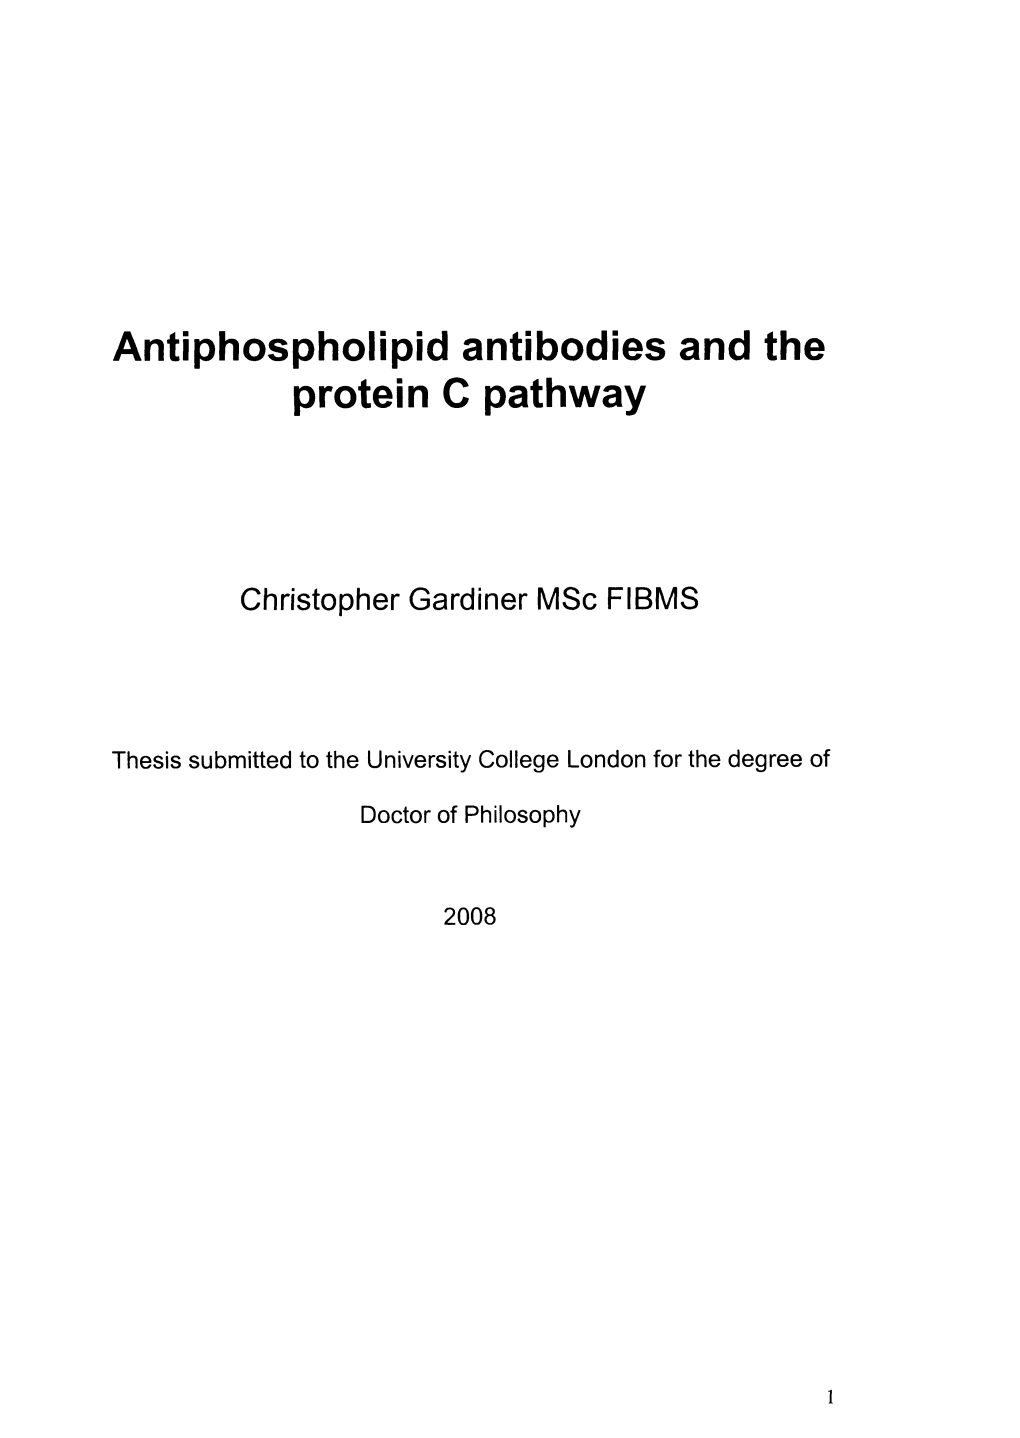 Antiphospholipid Antibodies and the Protein C Pathway